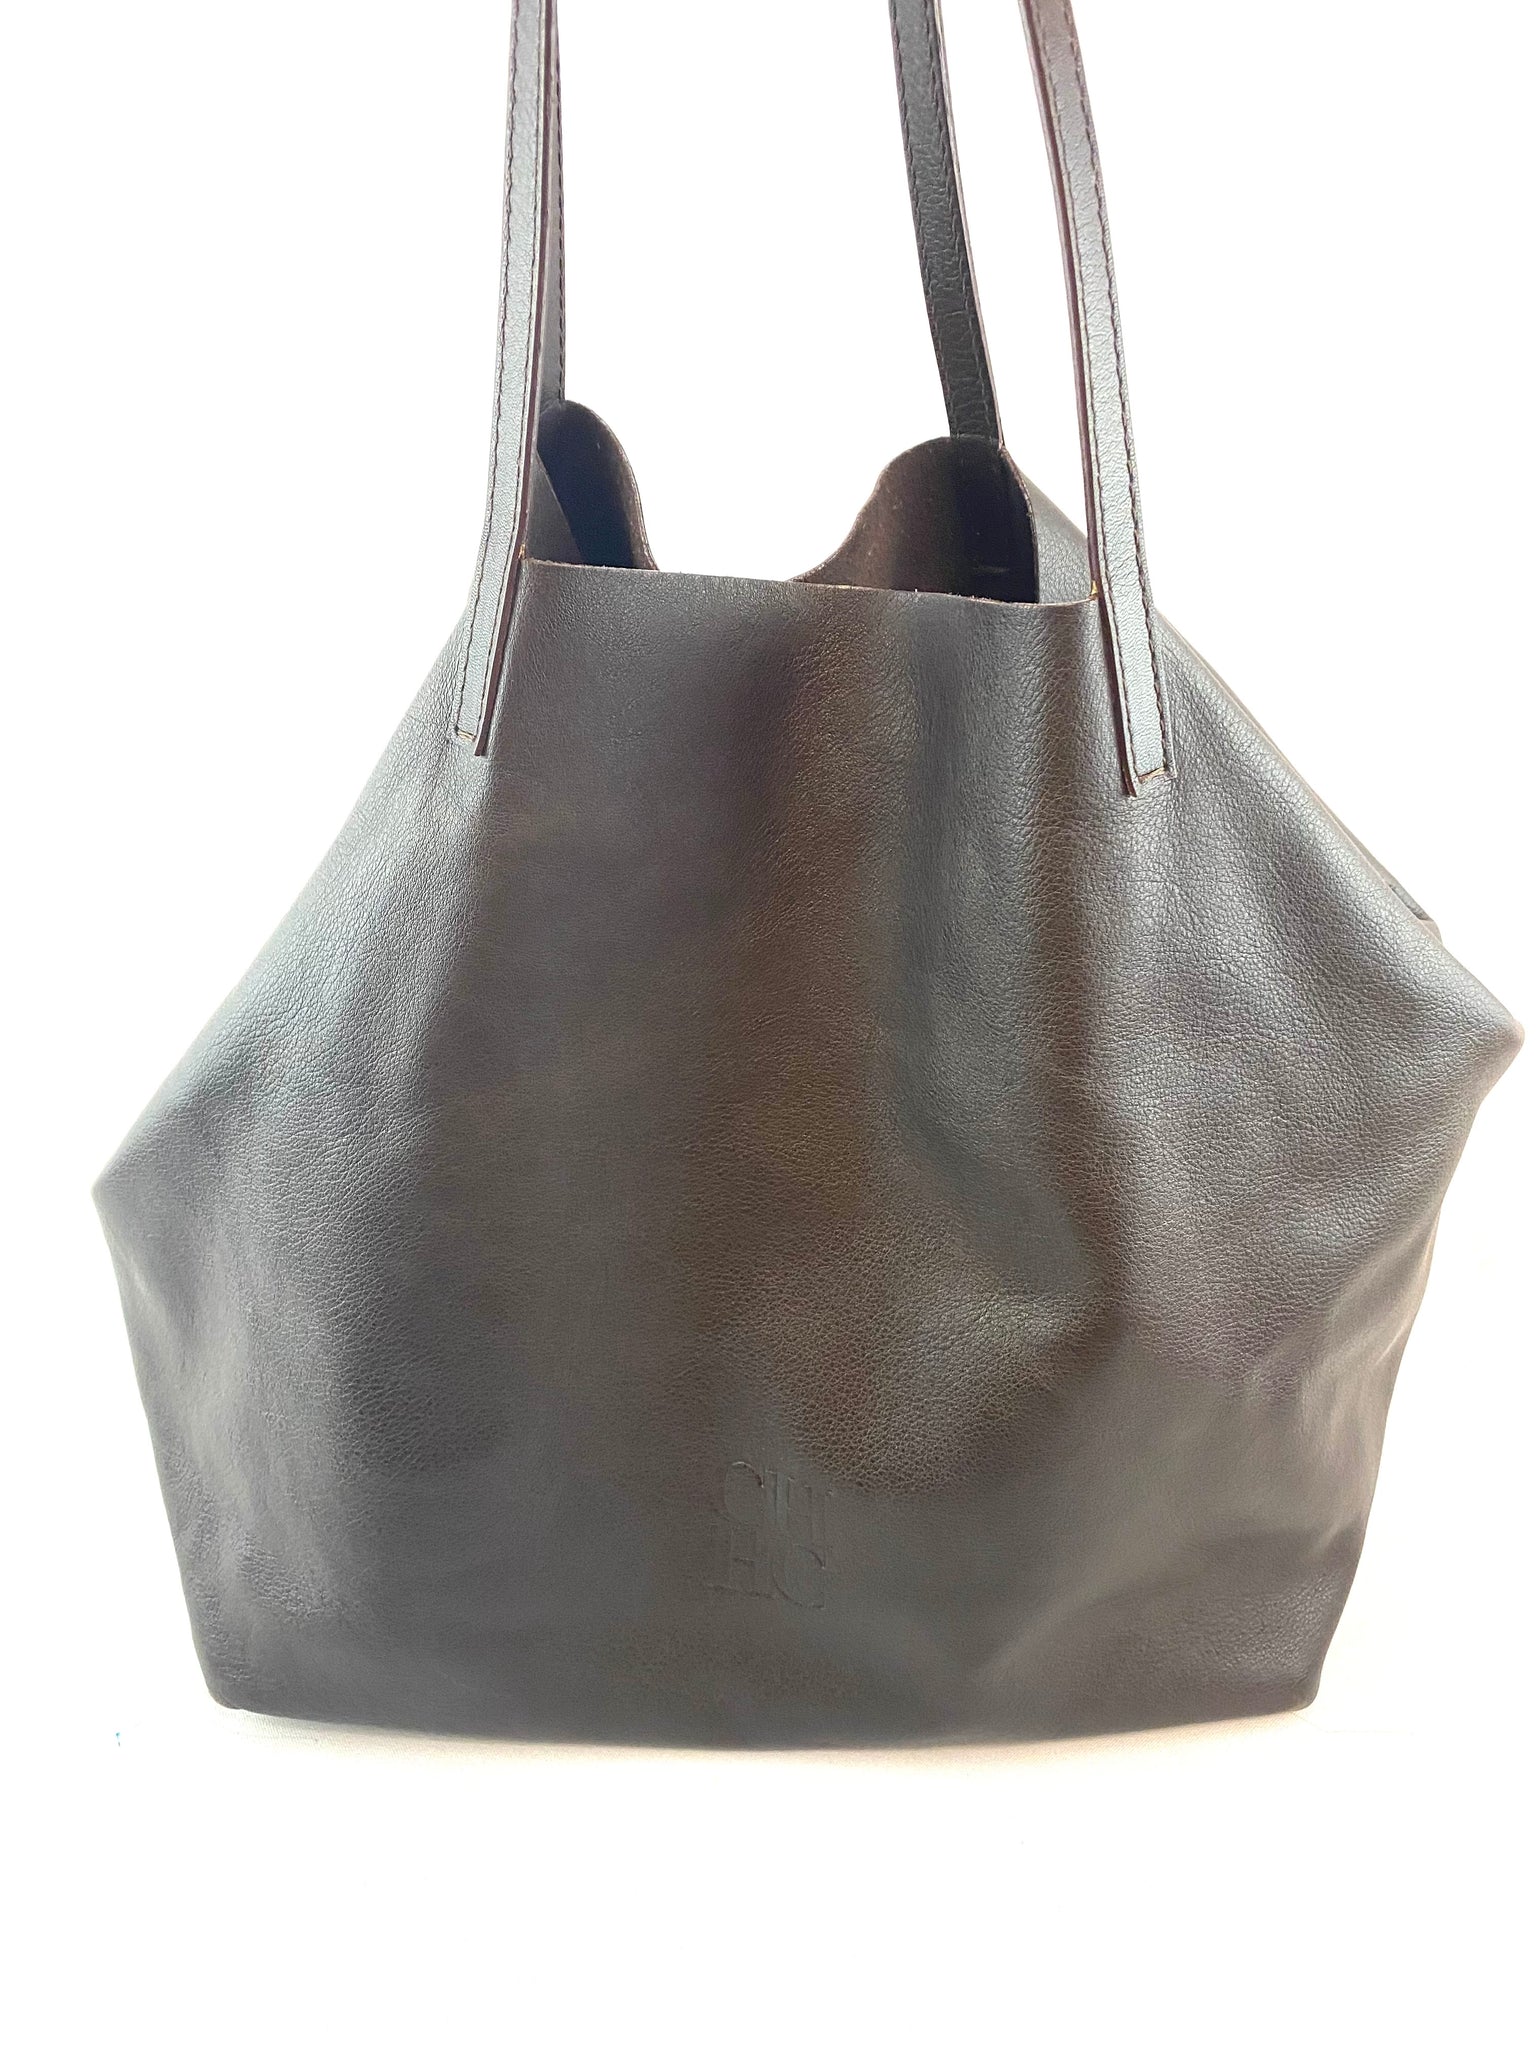 CH Carolina Herrera Black Leather MATRYOSHKA Tote Handbag